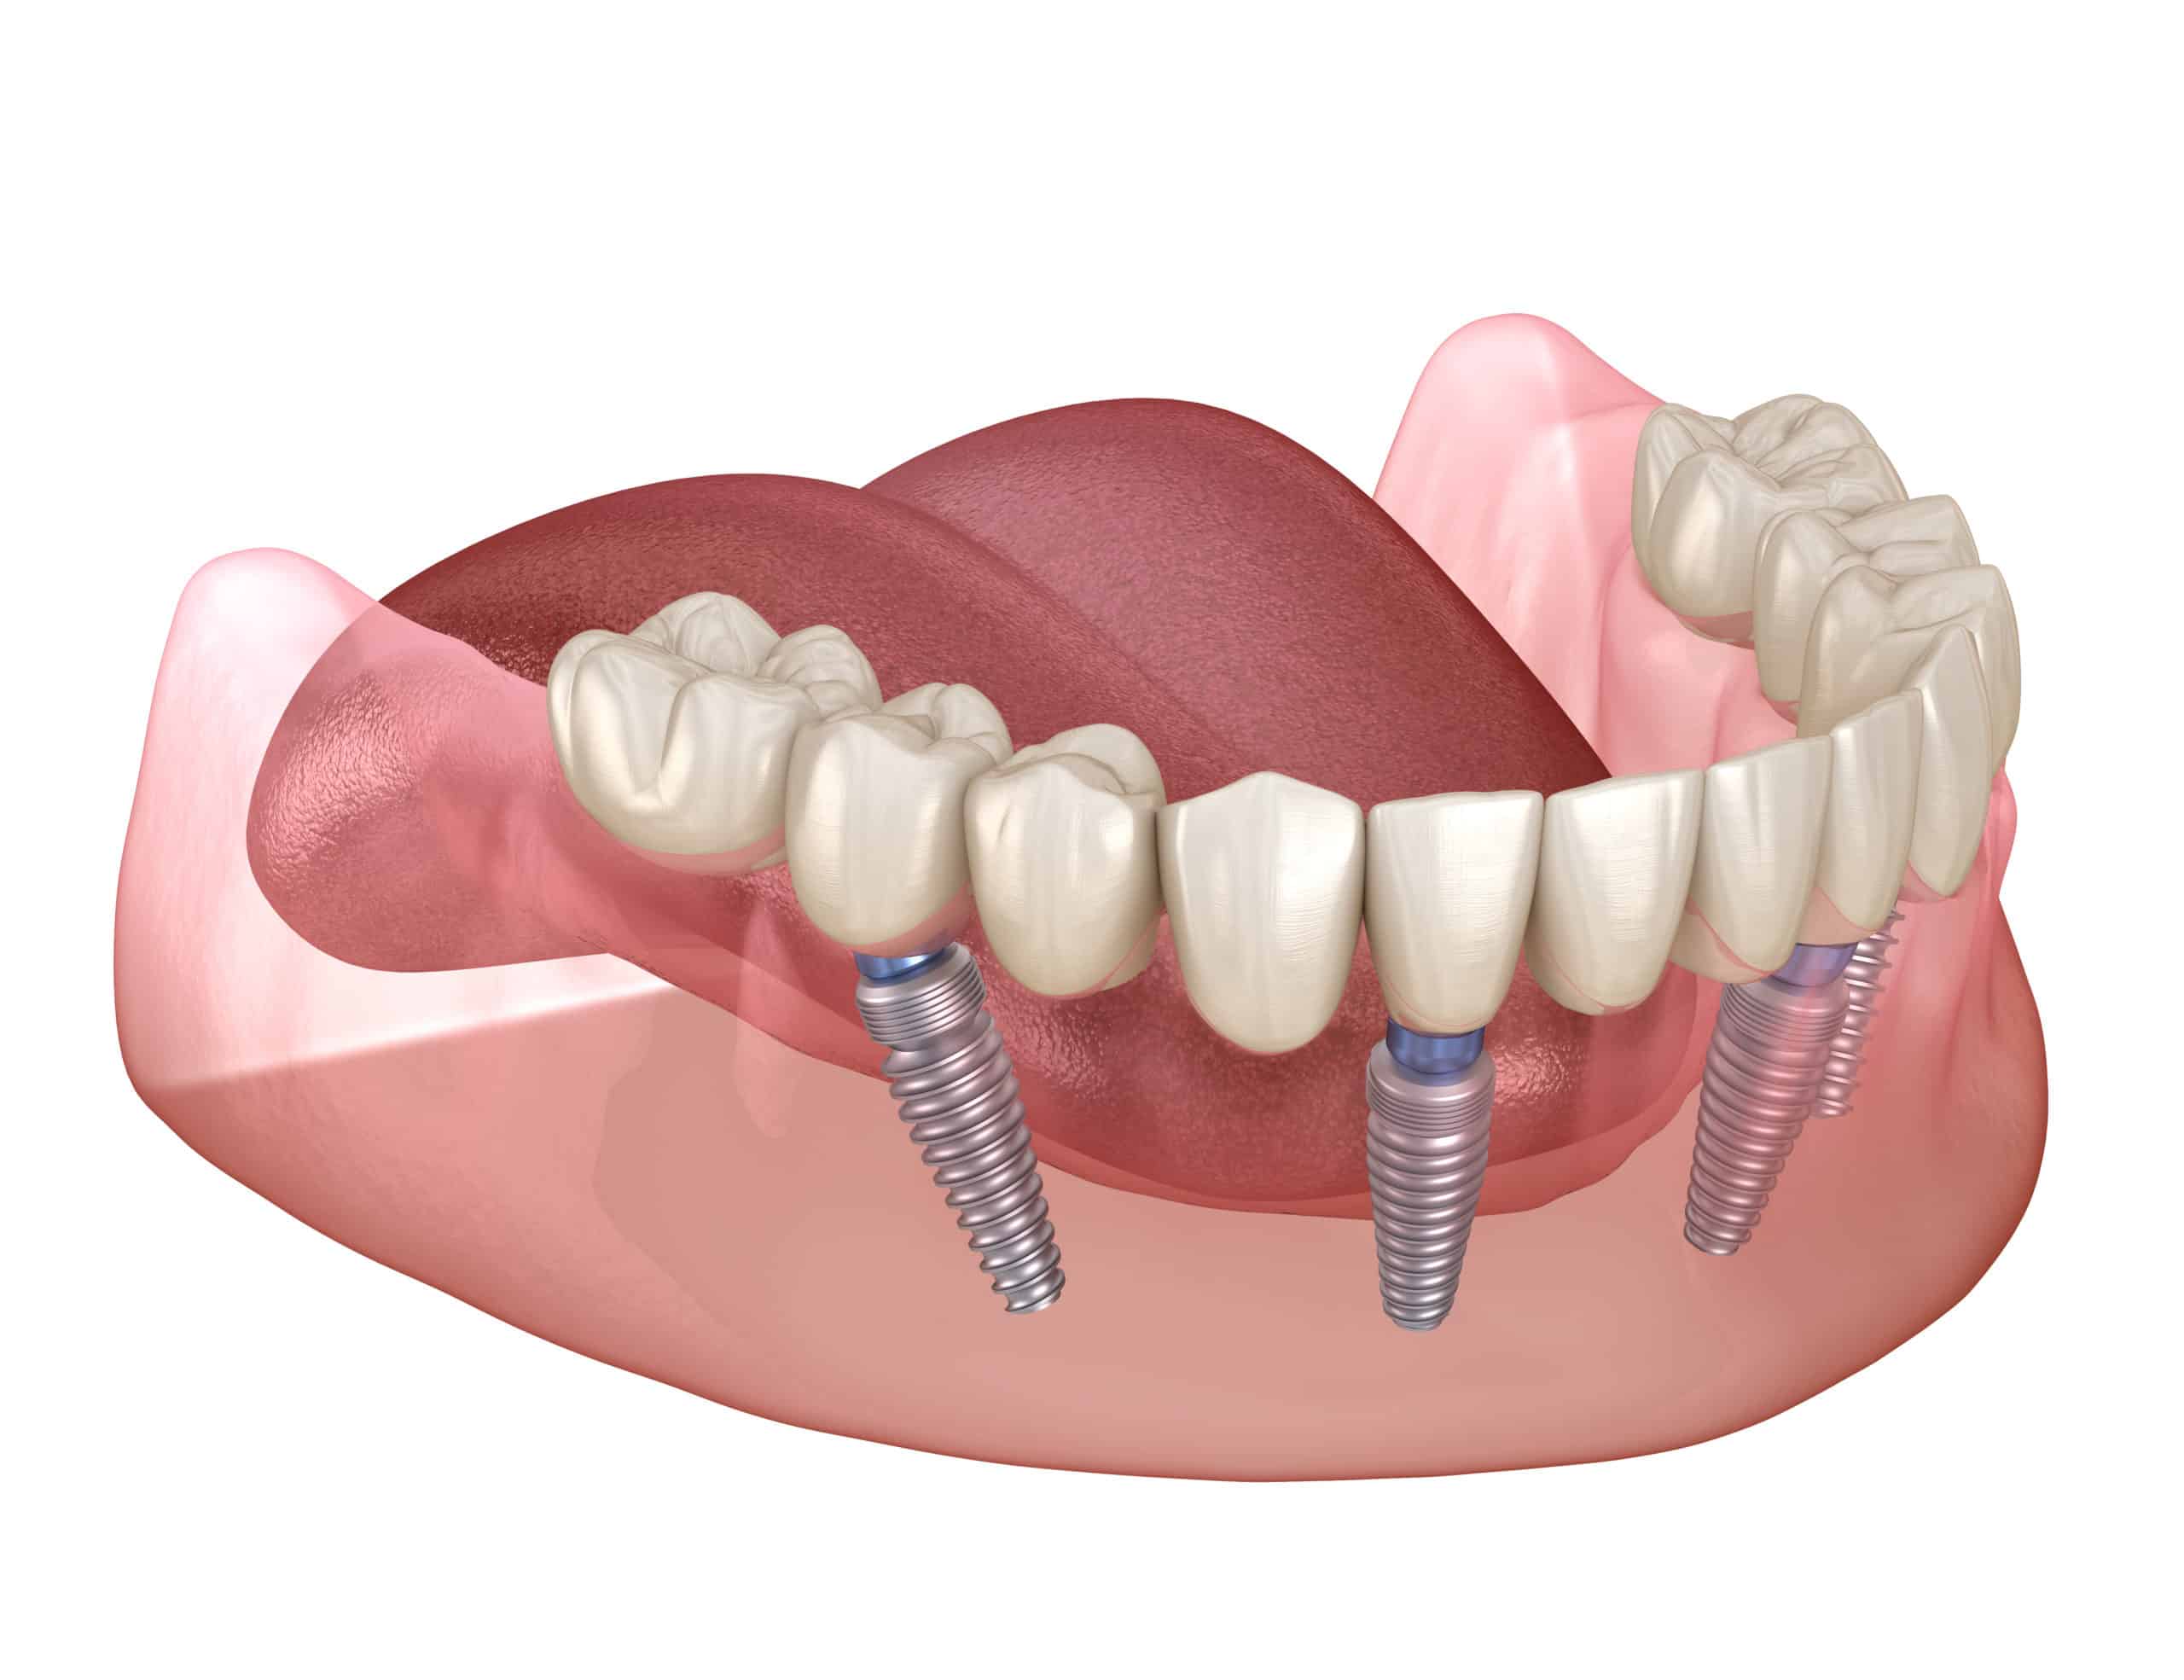 All-on-Four dental implants in Chicago, Evanston, Skokie